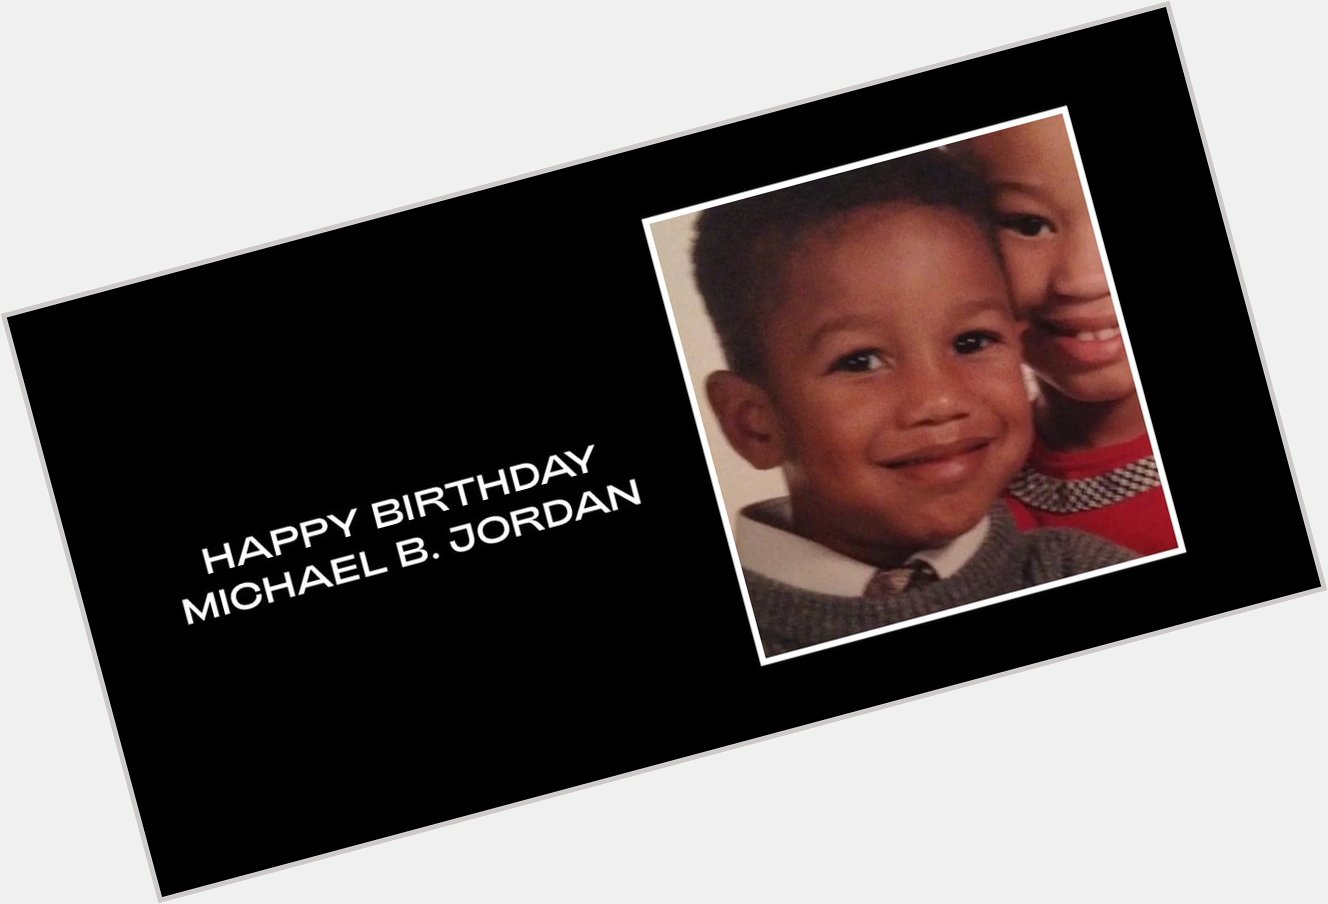  Happy Birthday Michael B. Jordan  